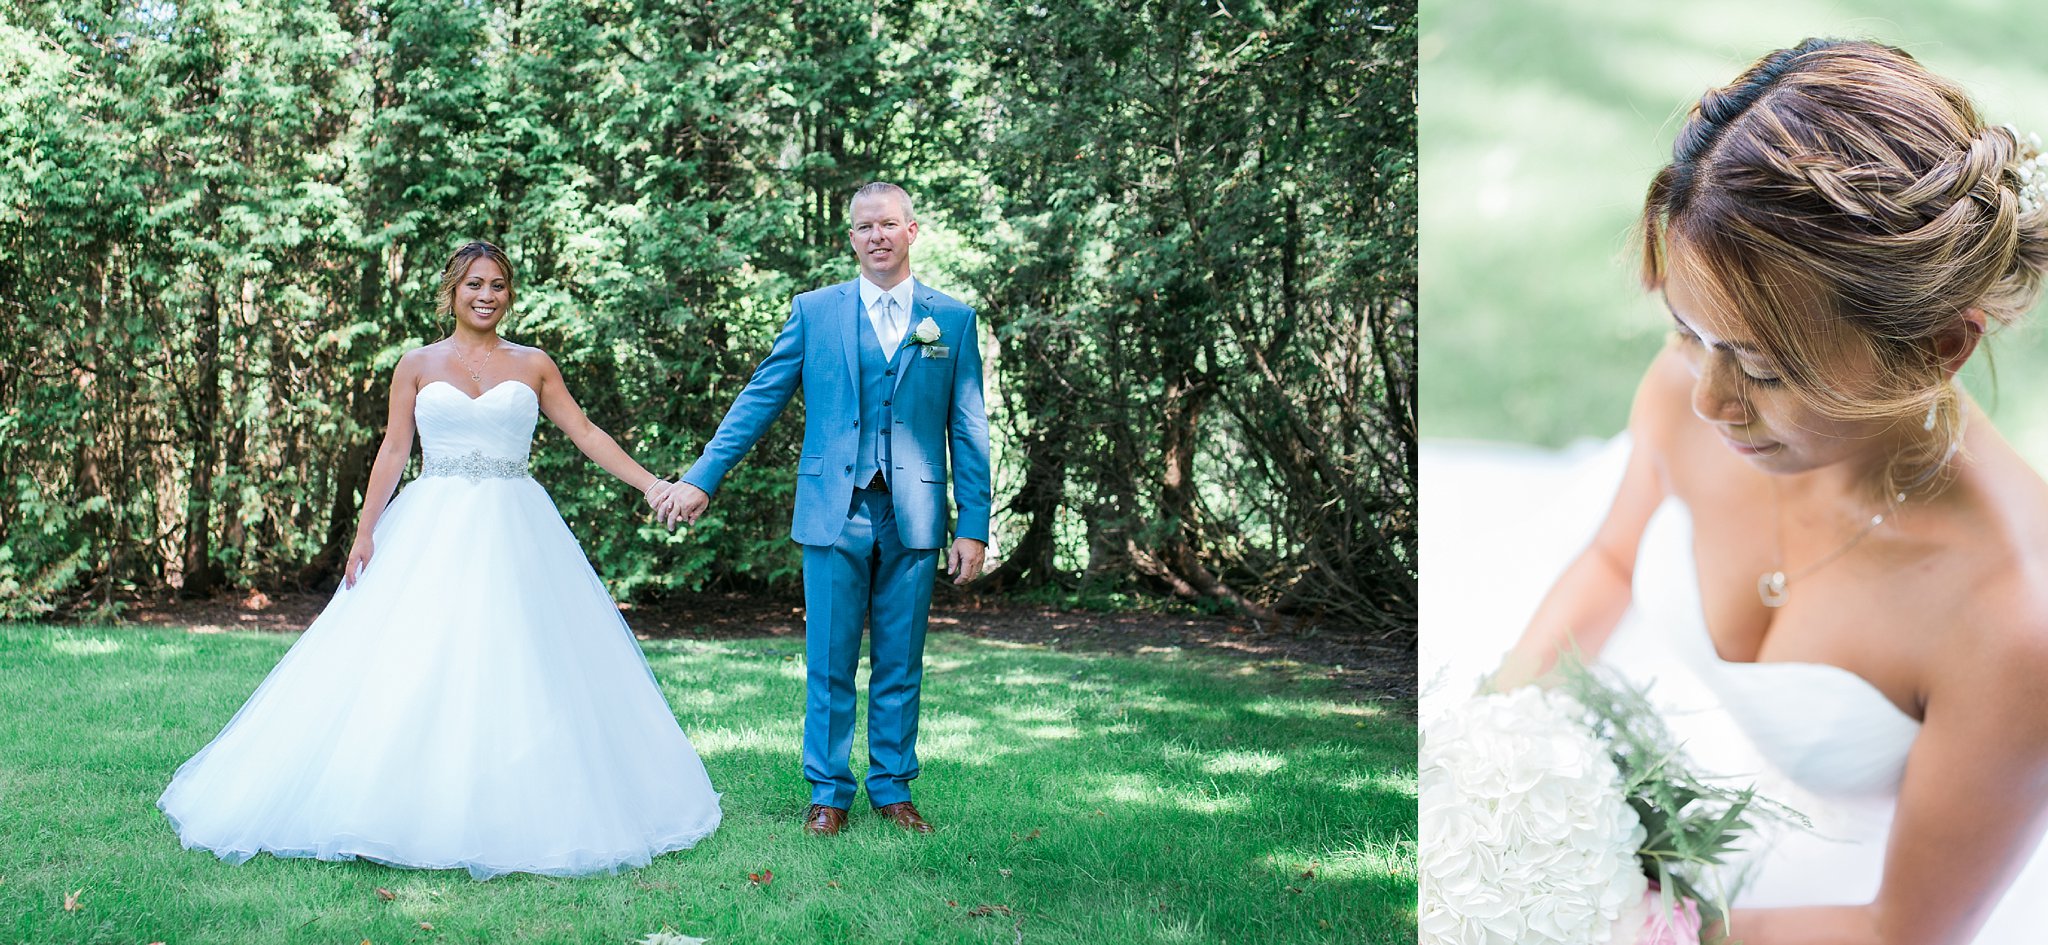 Jennifer Blaak Photography, Burlington Wedding Photographer, Wedding at Paletta Mansion in Burlington, Bride and Groom by tall trees, Beauty shot of bride